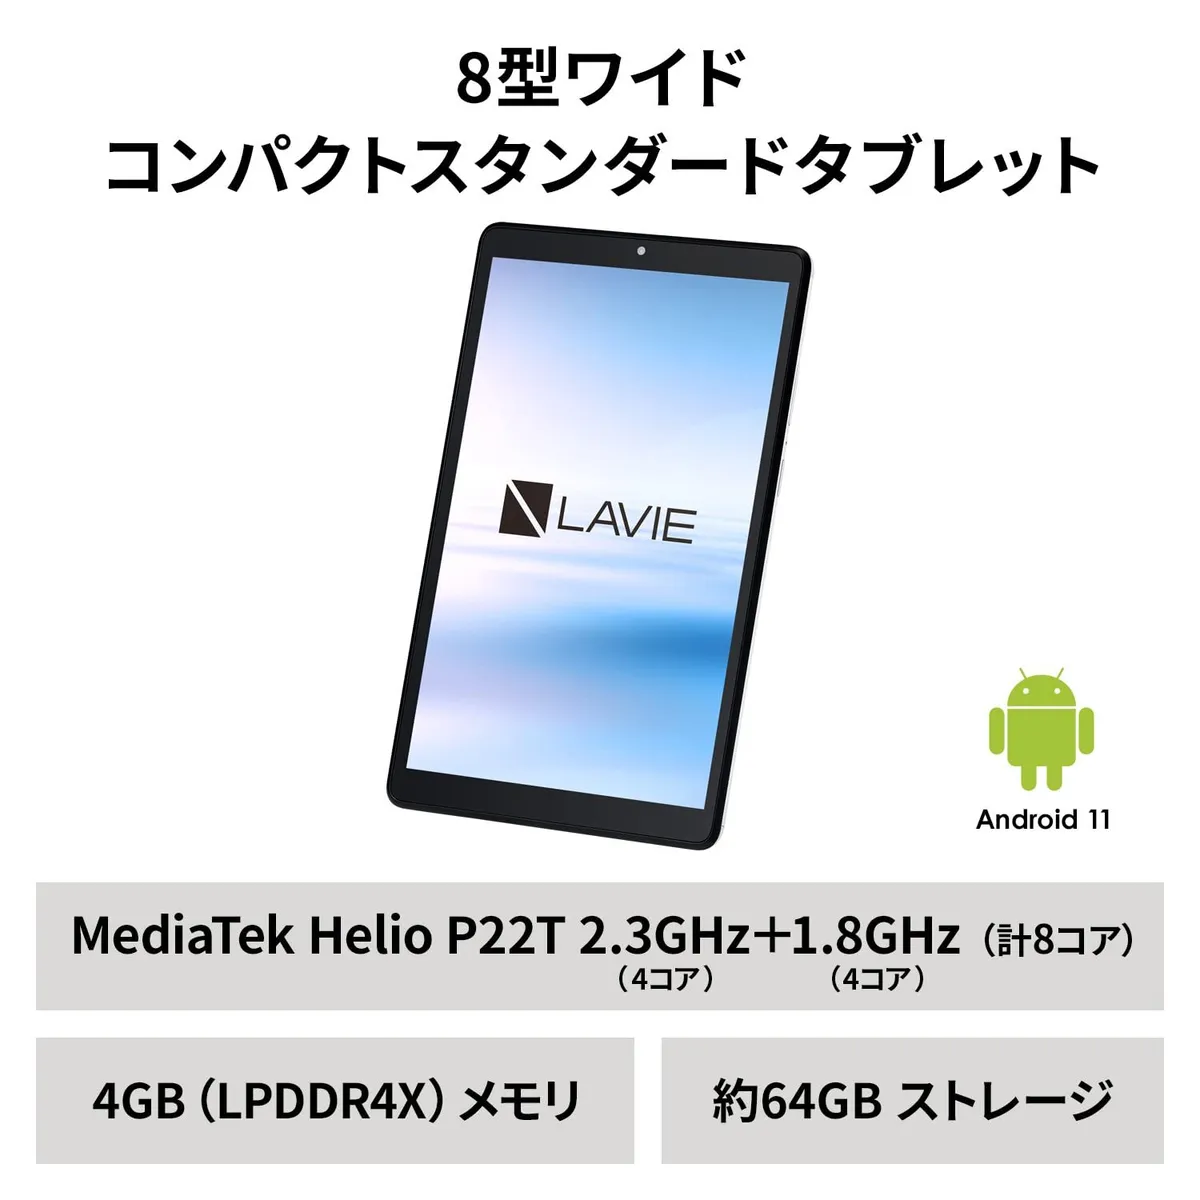 NEC LAVIE T8 tablet 8-in Wi-Fi Android 11 MediaTek Helio P22T 4GB